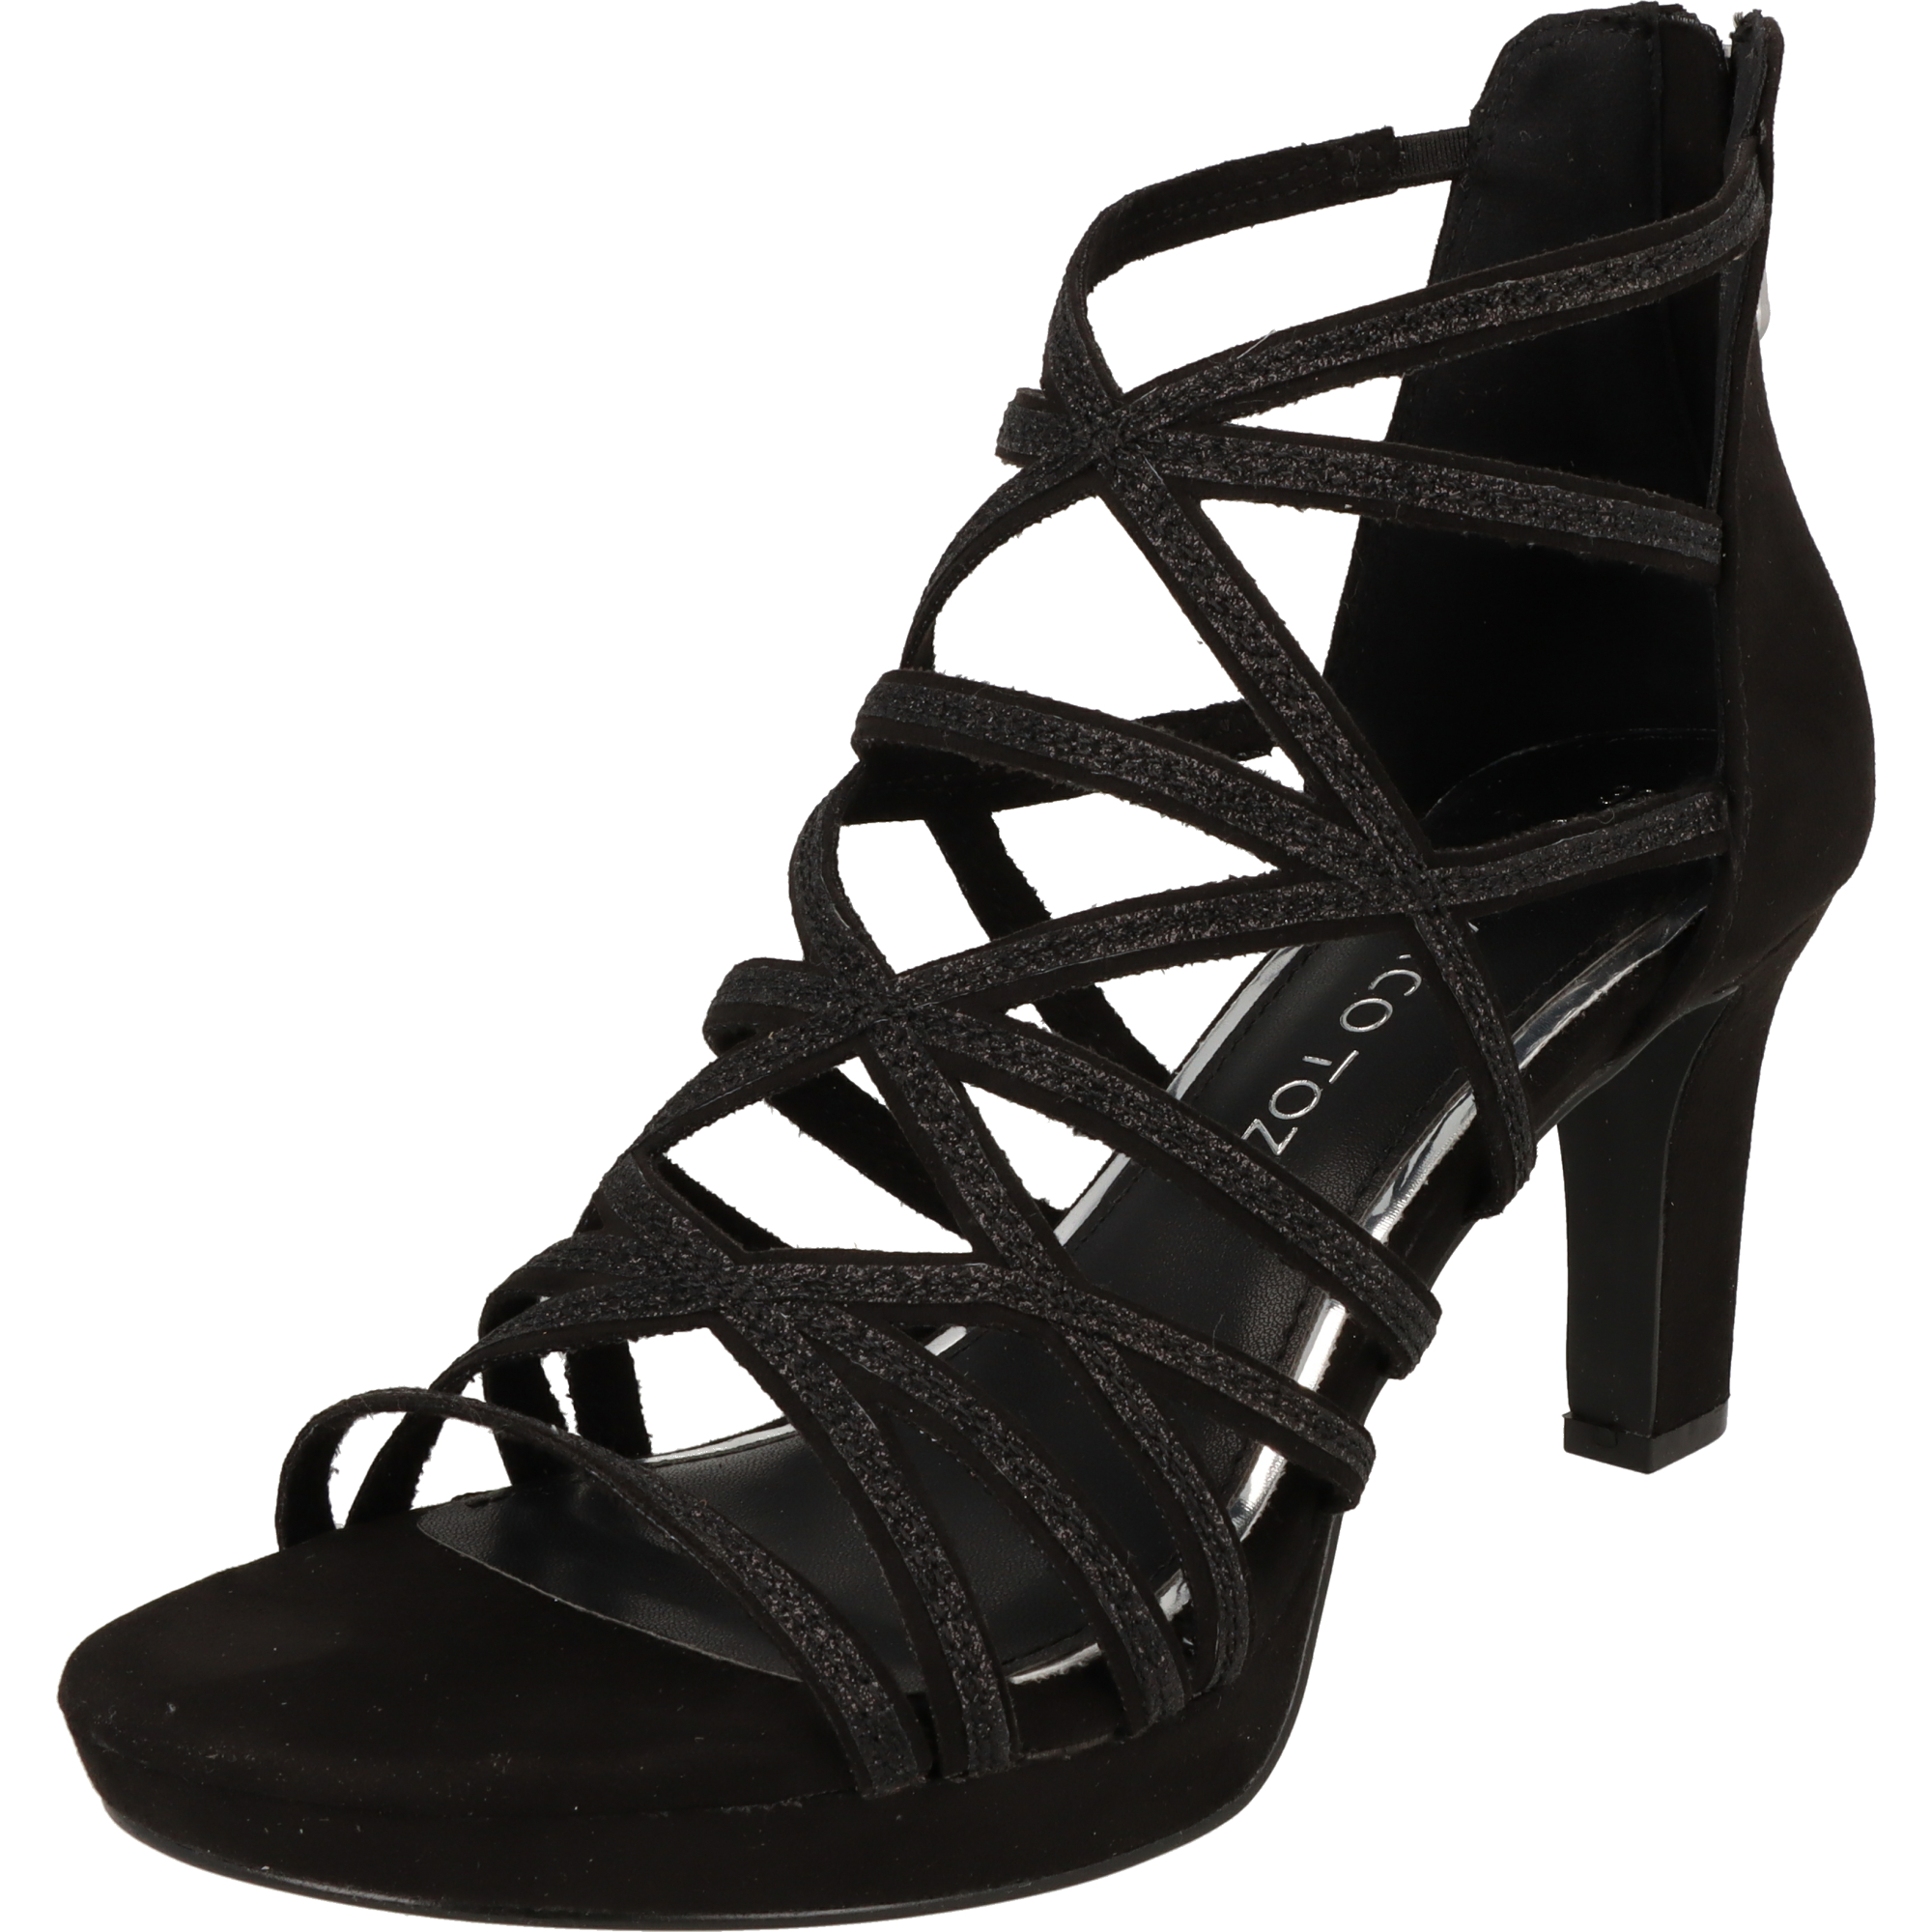 Marco Tozzi 2-28373-42 Damen Schuhe elegante High Heel Absatzsandalette Black